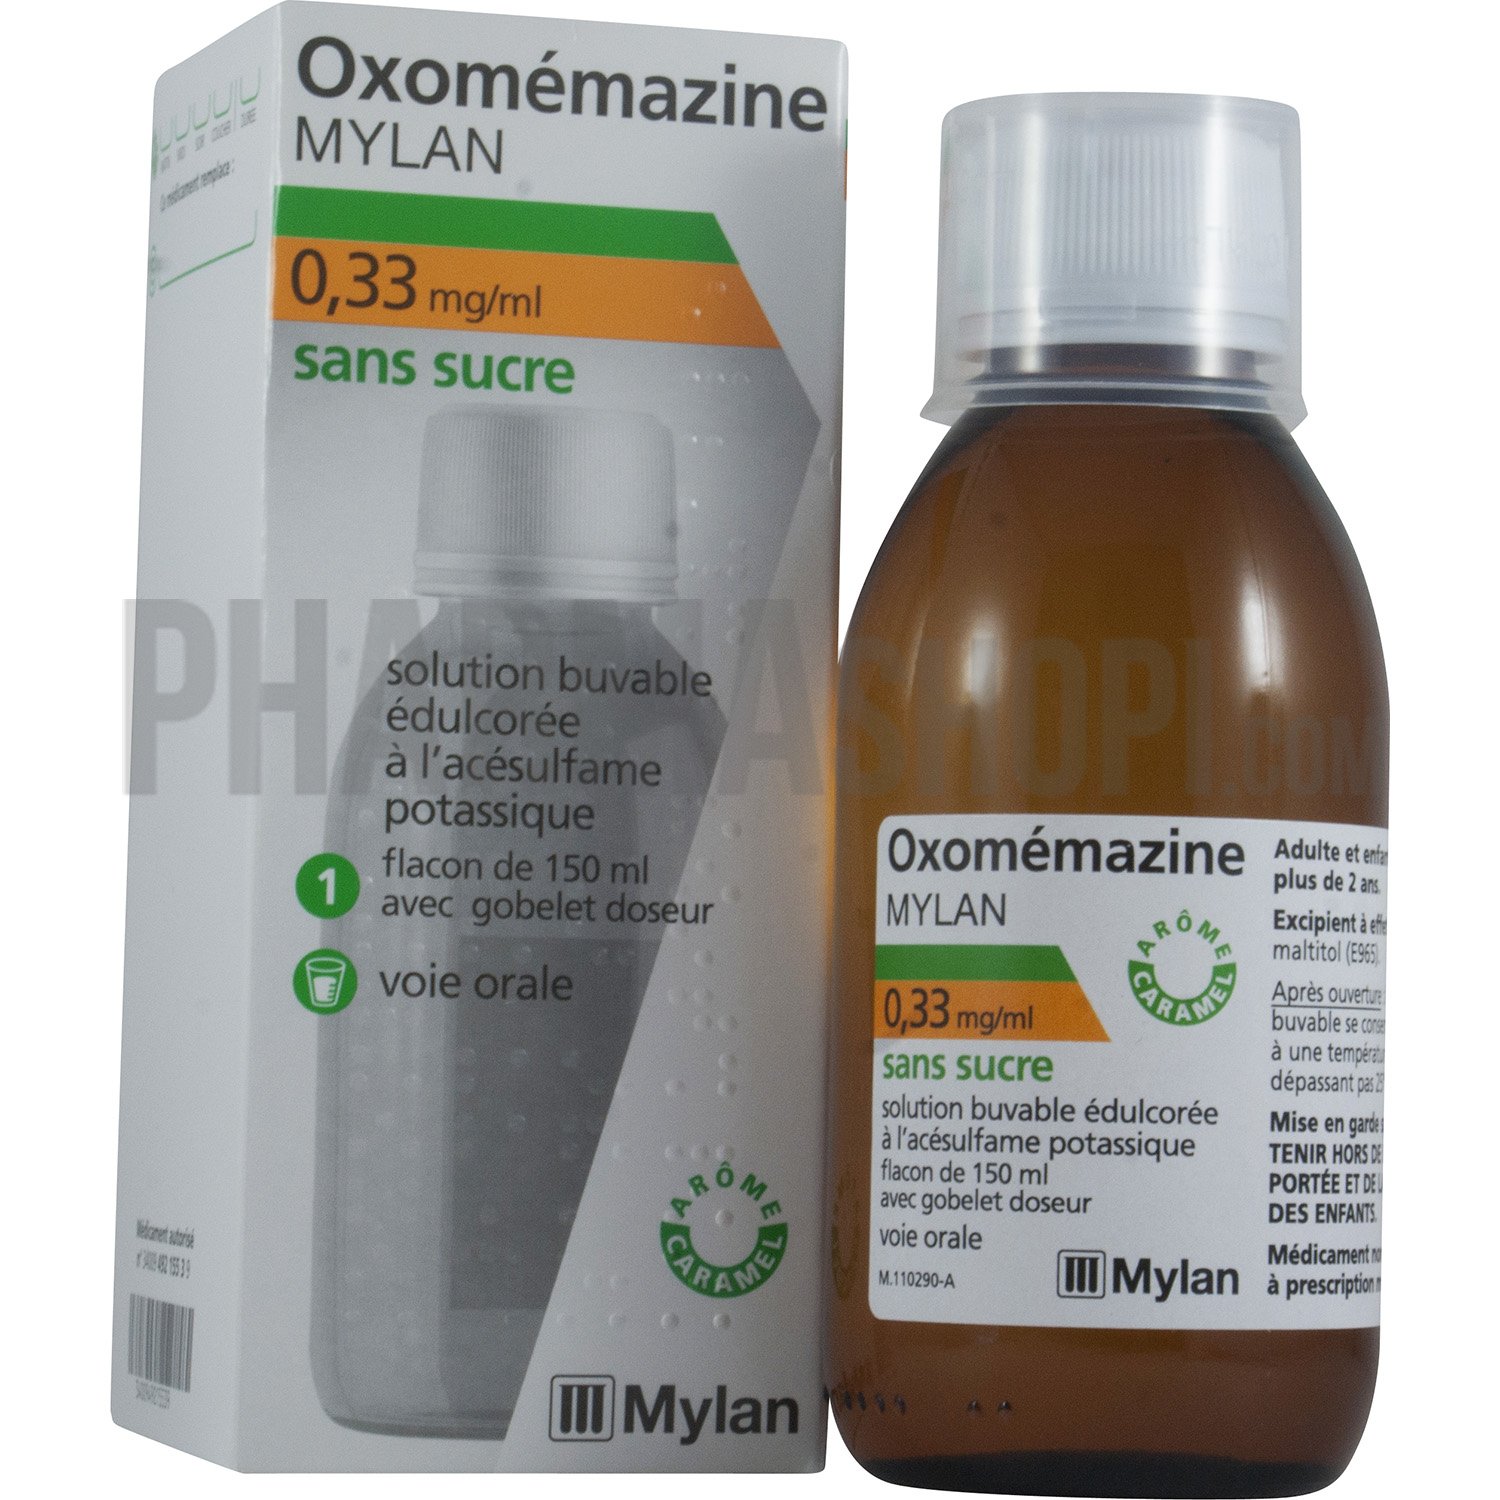 OXOMEMAZINE MYLAN 0,33 mg/ml SANS SUCRE solution buvable - 1 flacon de 150 ml